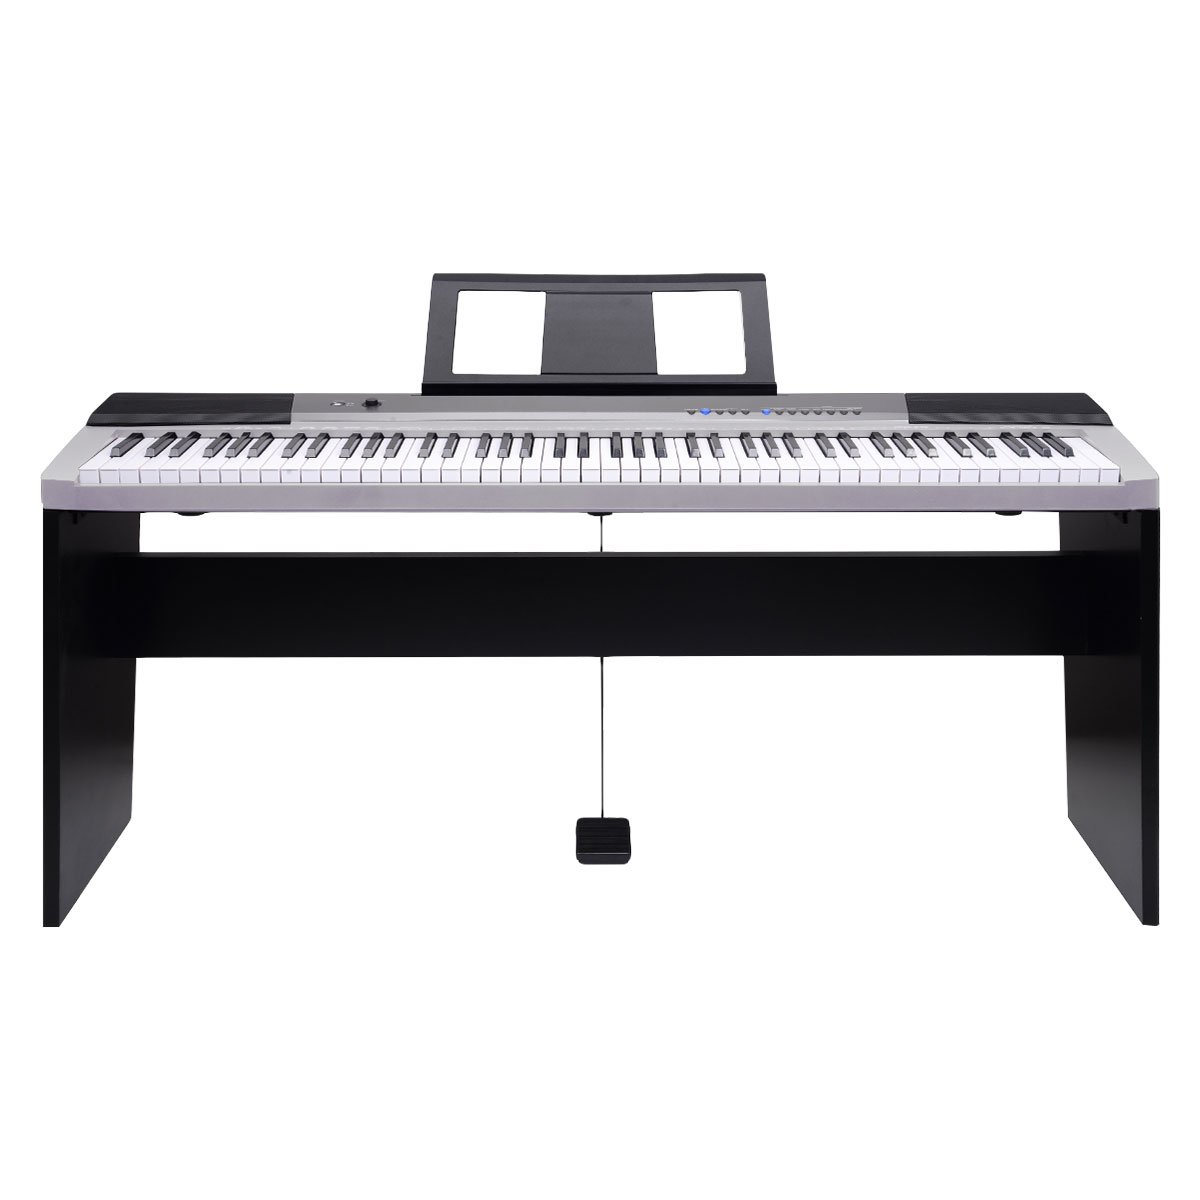 Karrera 88 Keys Electronic Keyboard Piano with Stand Silver 2